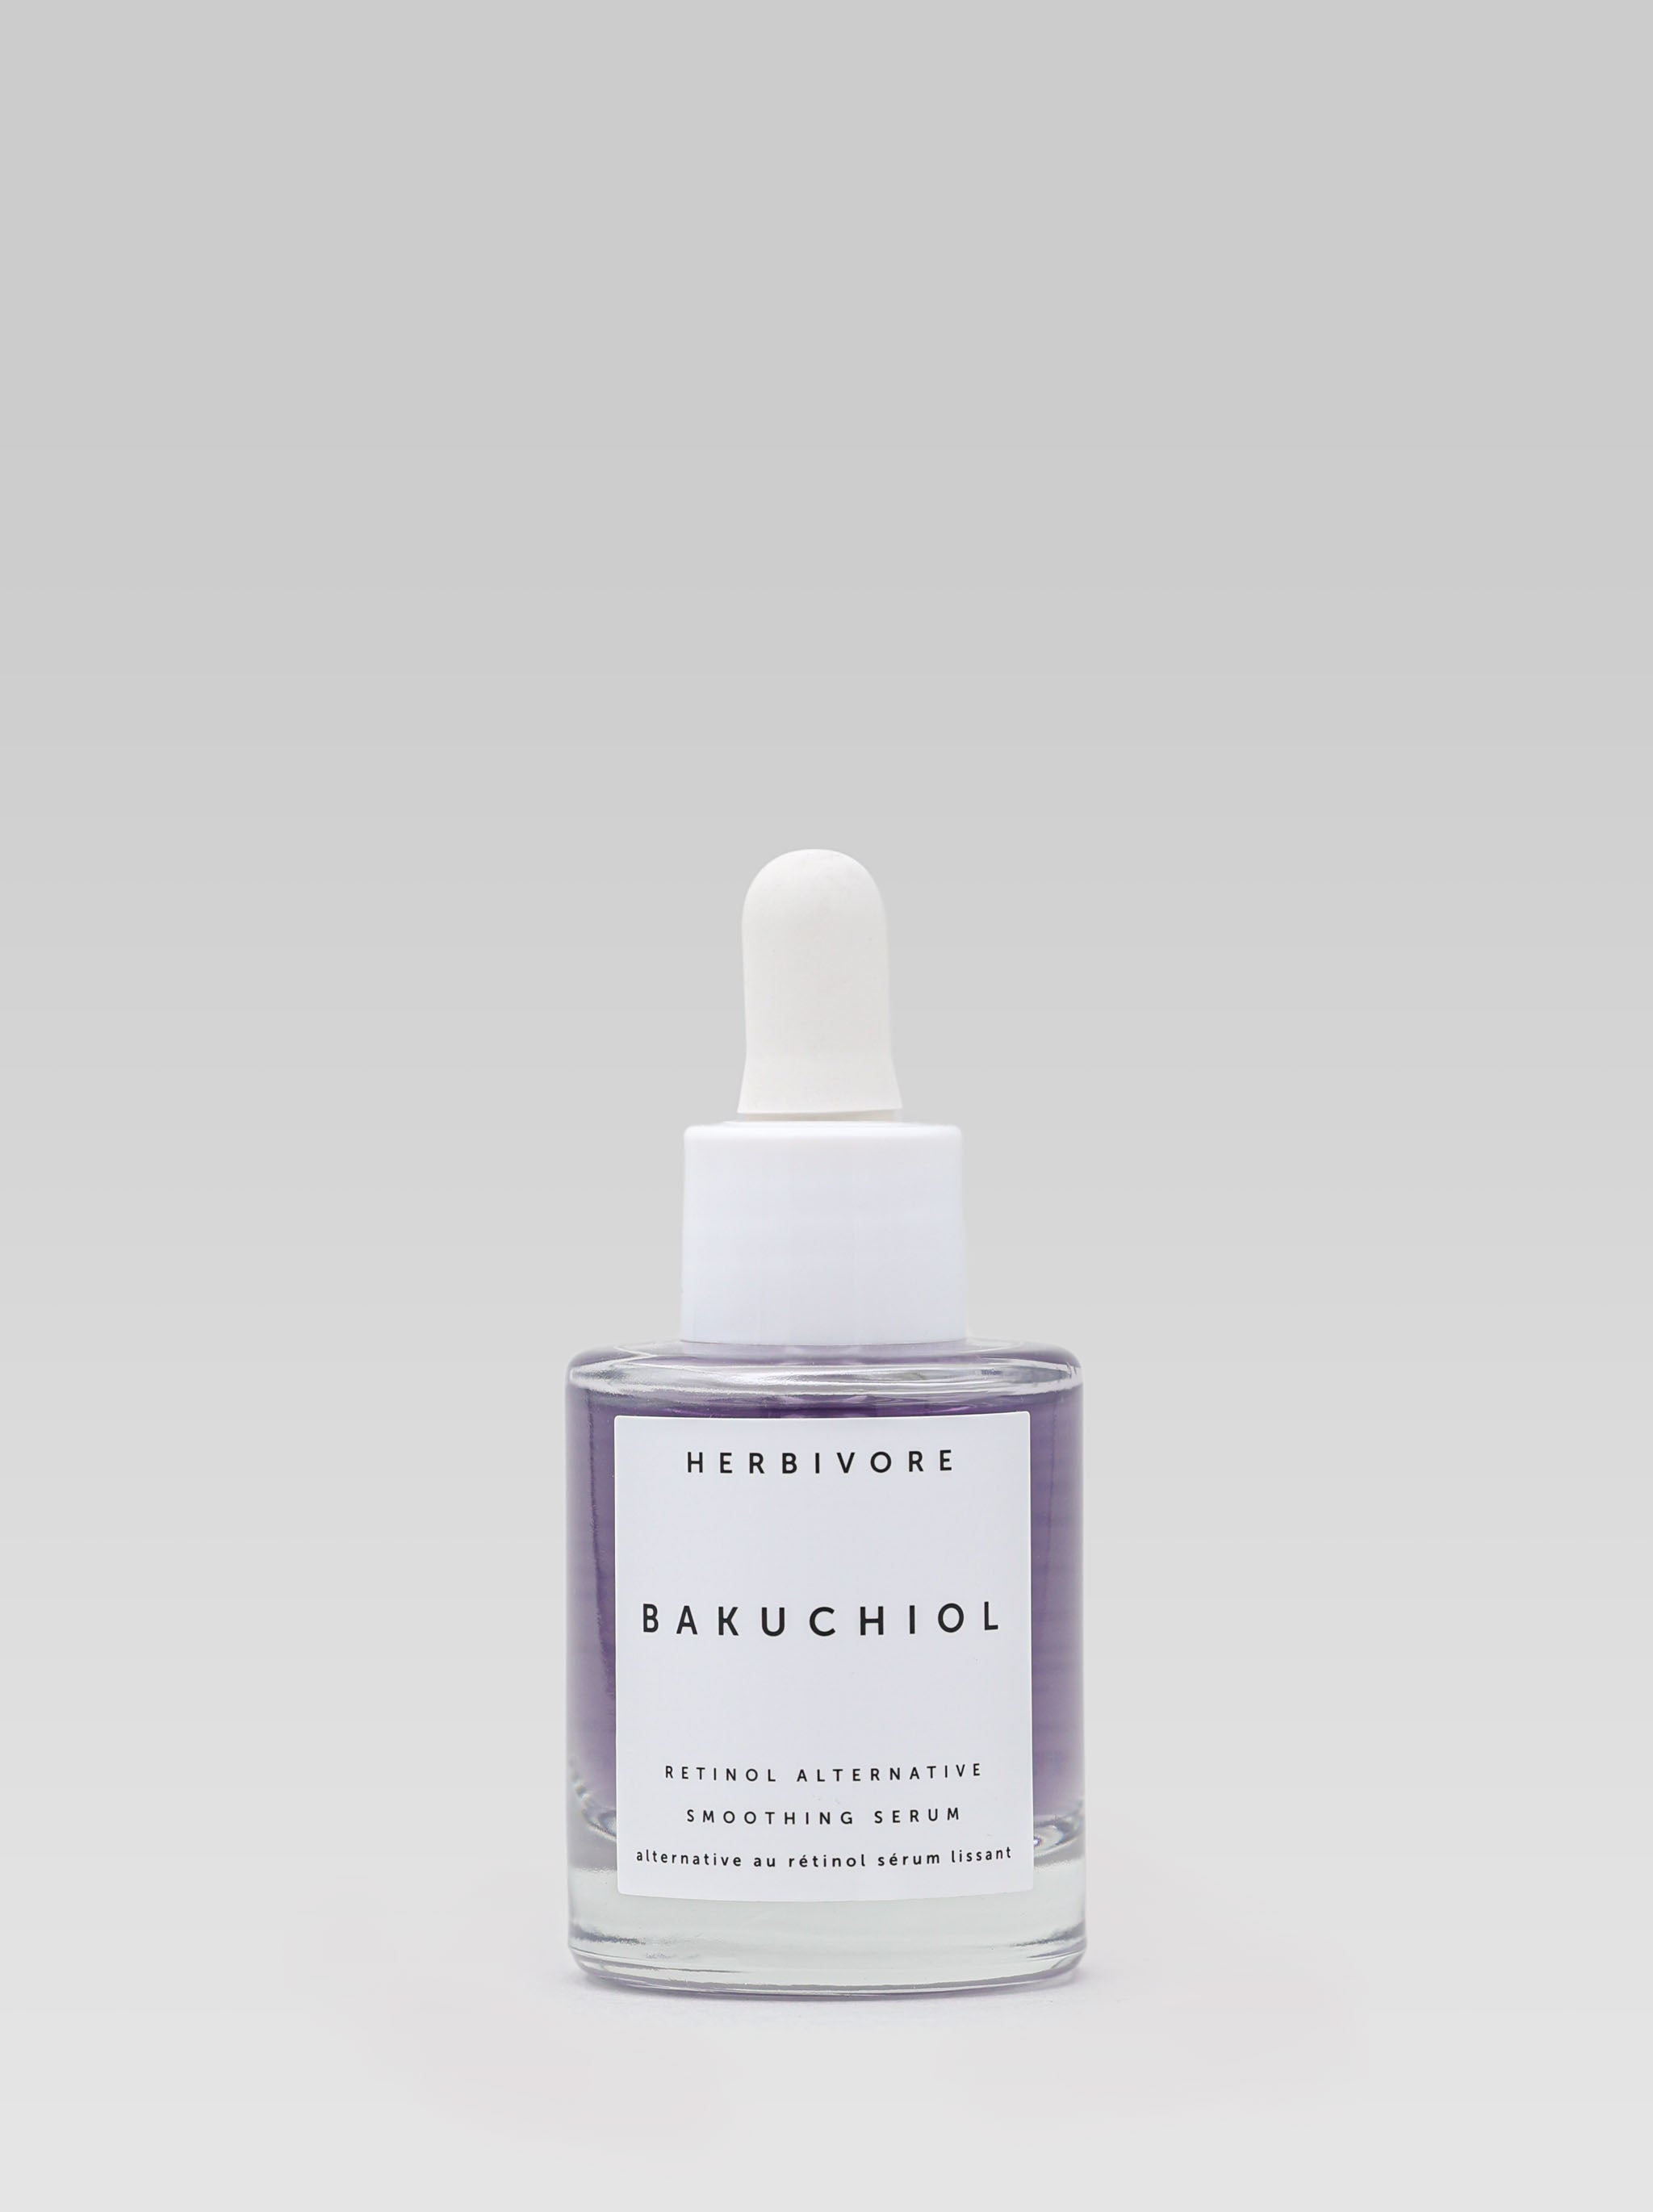 HERBIVORE BOTANICALS Bakuchiol Retinol Alternative Smoothing Serum product shot